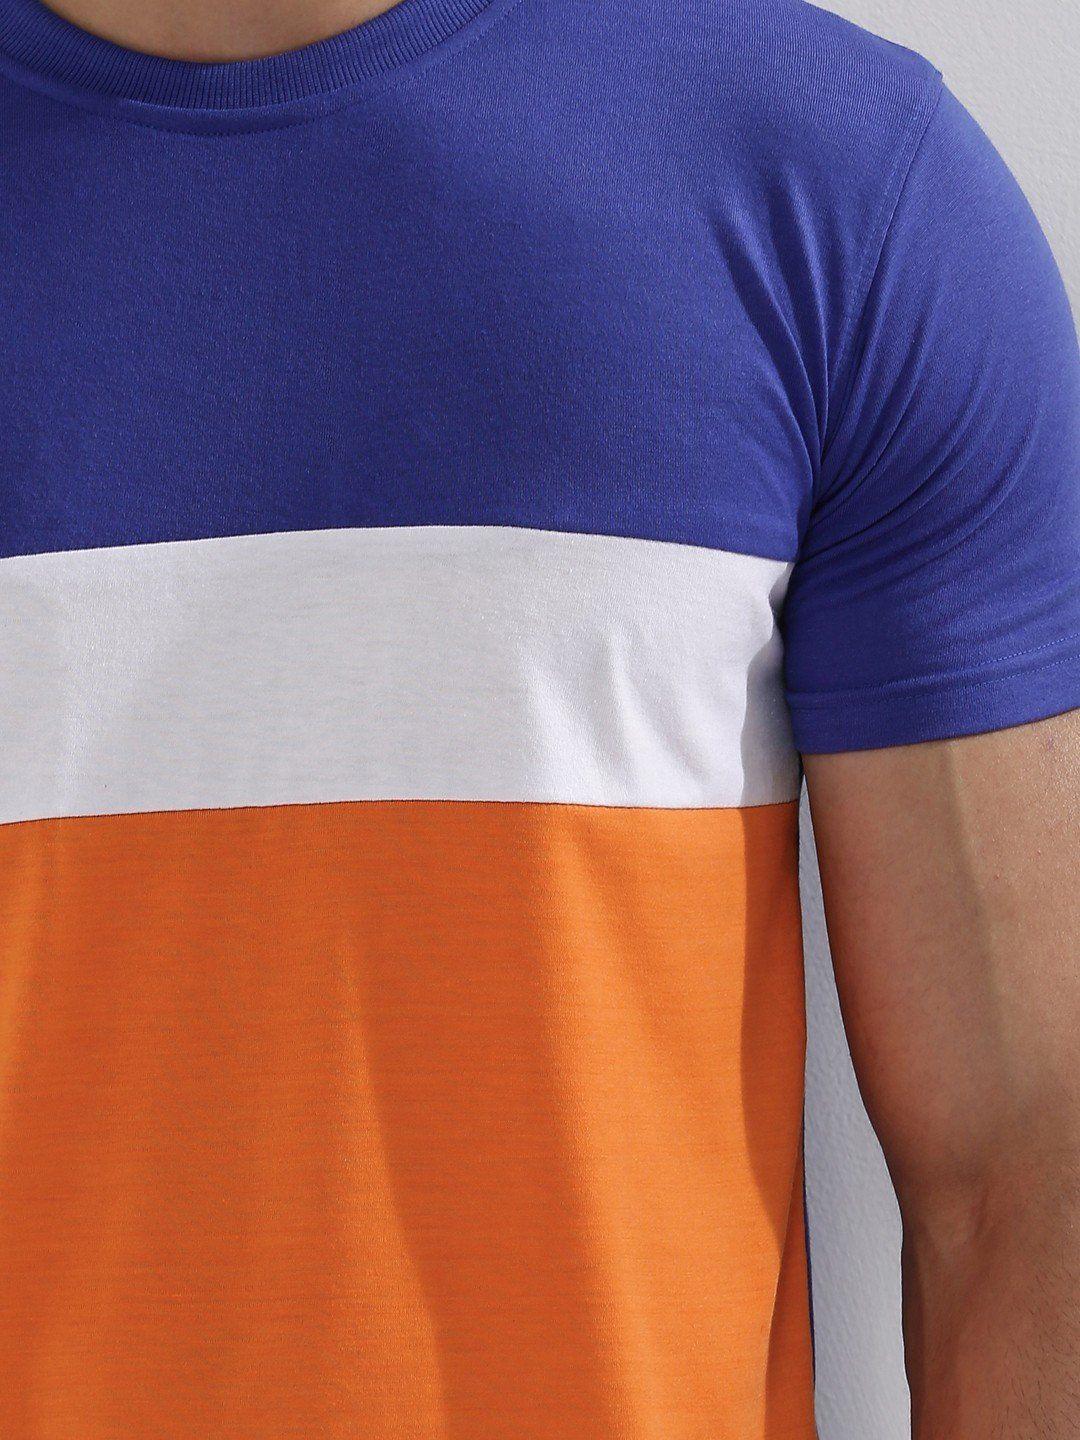 Blue and White with Orange Logo - Colour Block T-Shirt - BLUE / WHITE / ORANGE | Blotchwear